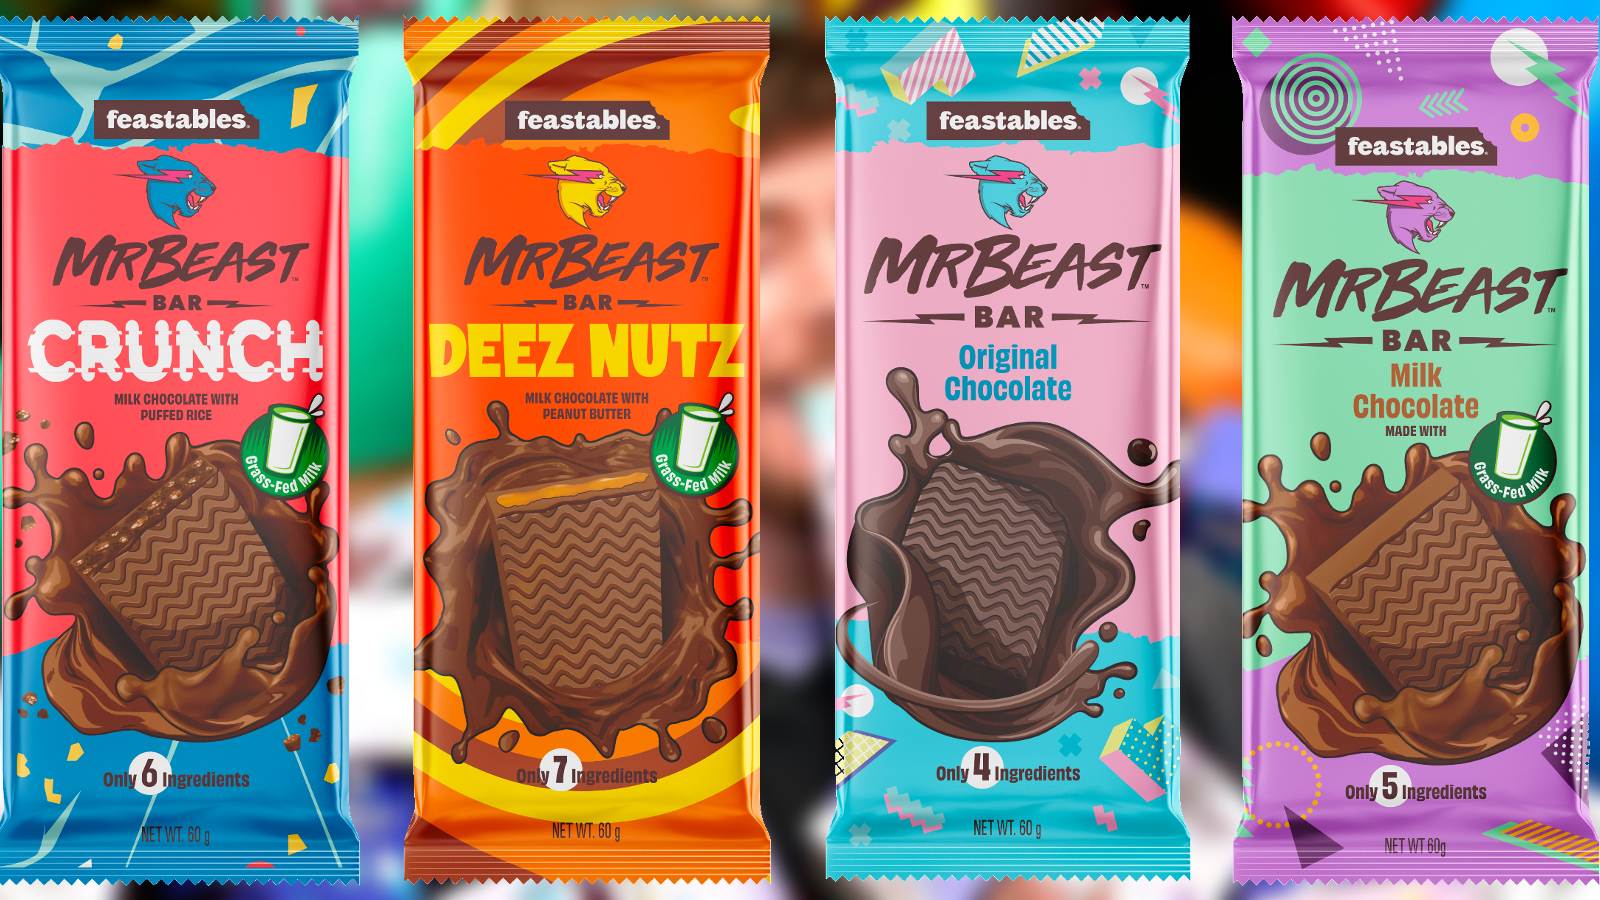 Trying MrBeast Deez Nutz Feastables Chocolate Bar! 